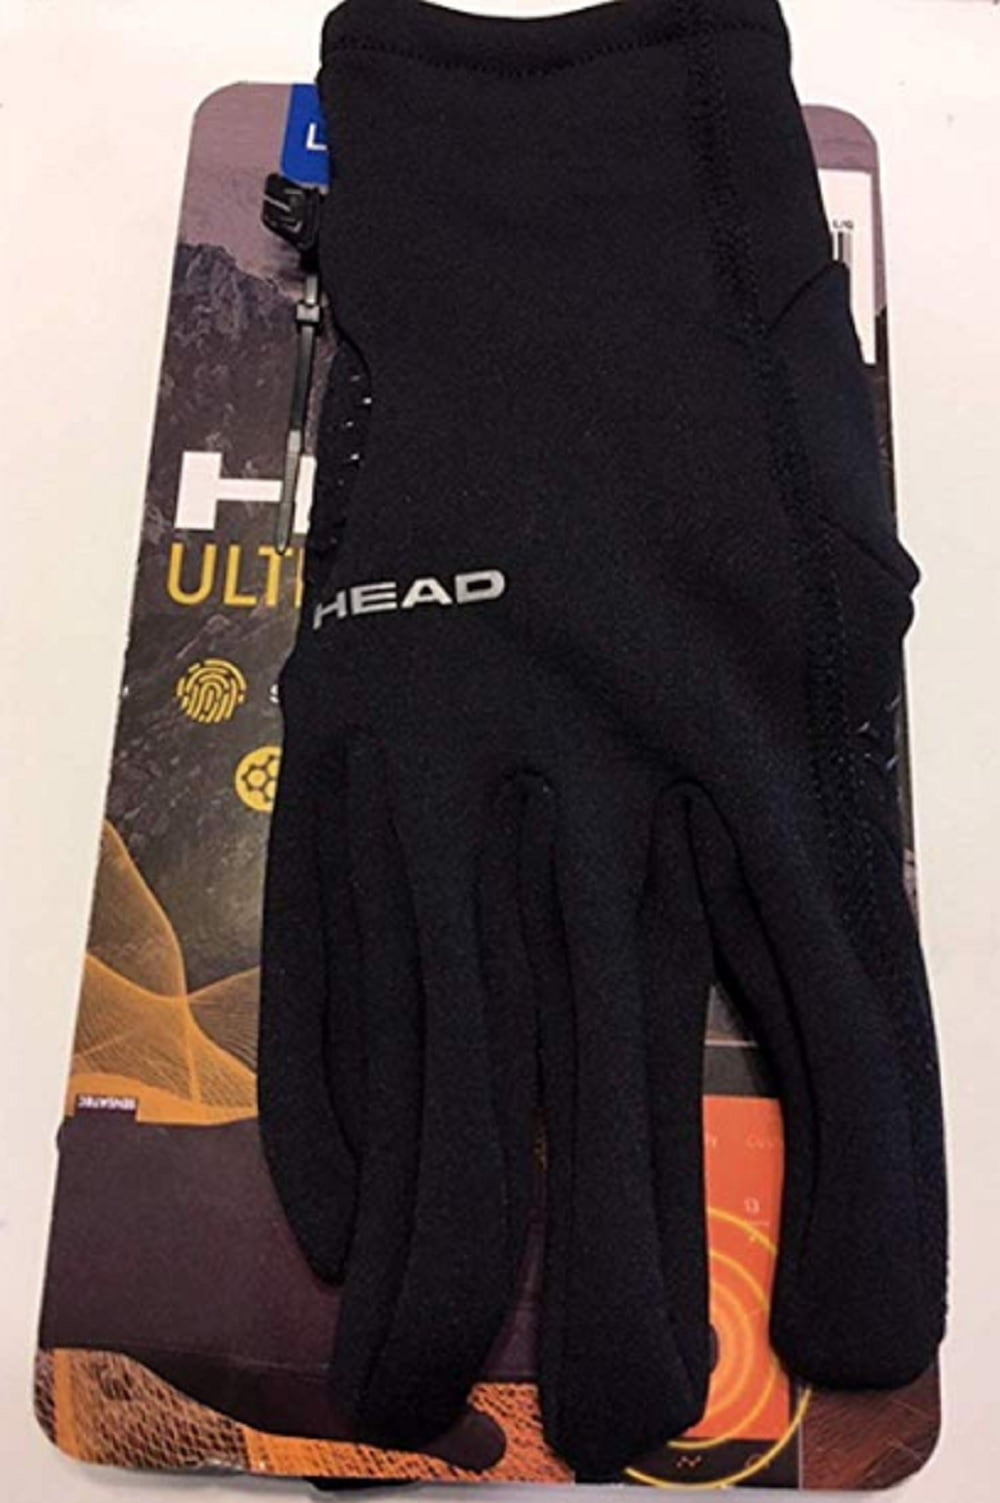 Head Multi-Sport Running Gloves with SensaTEC 